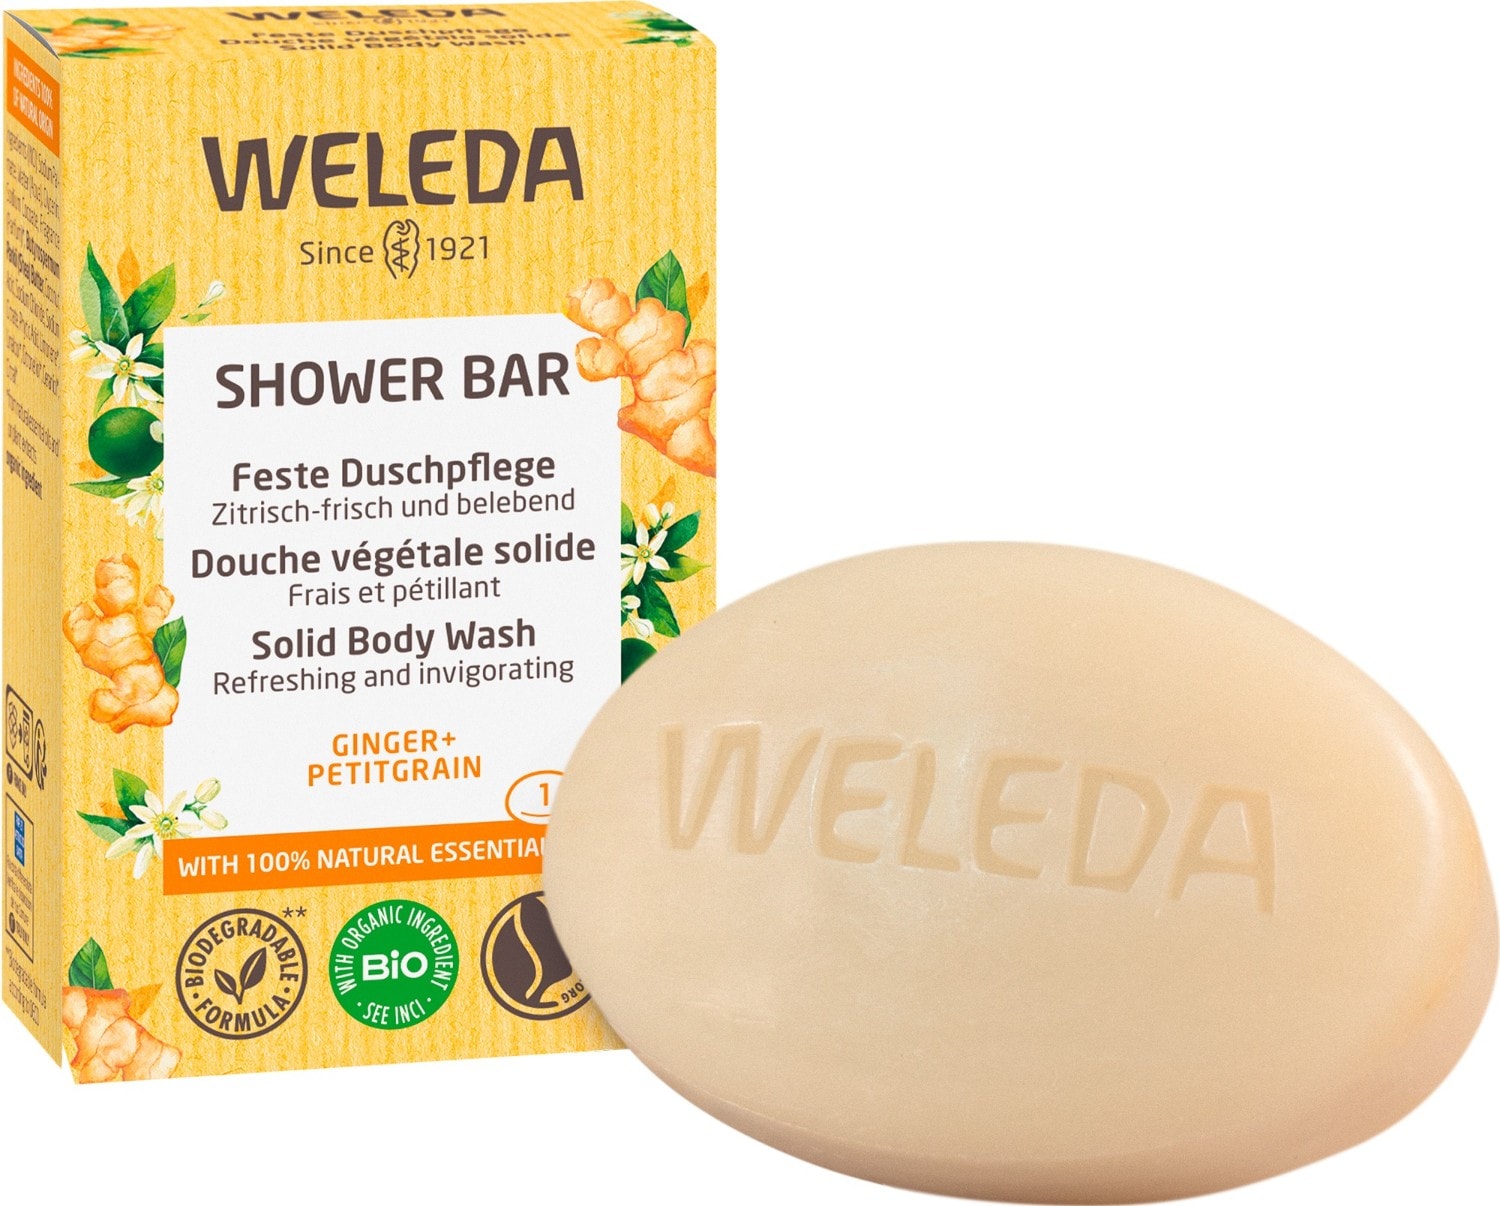 WELEDA Shower Bar - Ginger + Petitgrain